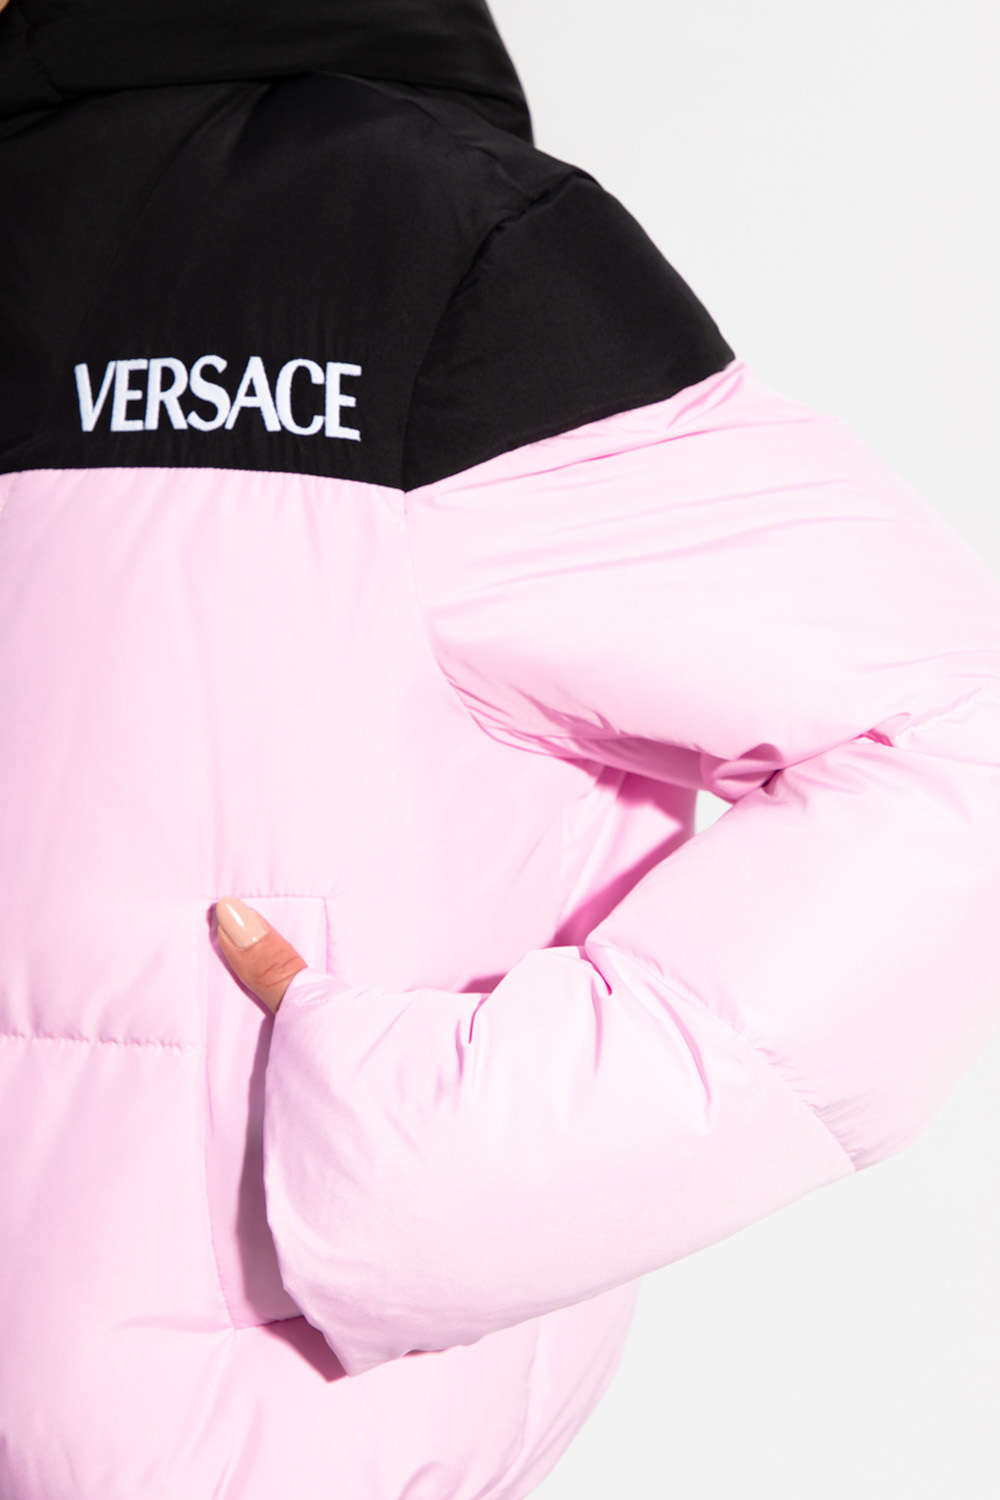 Versace Down jacket